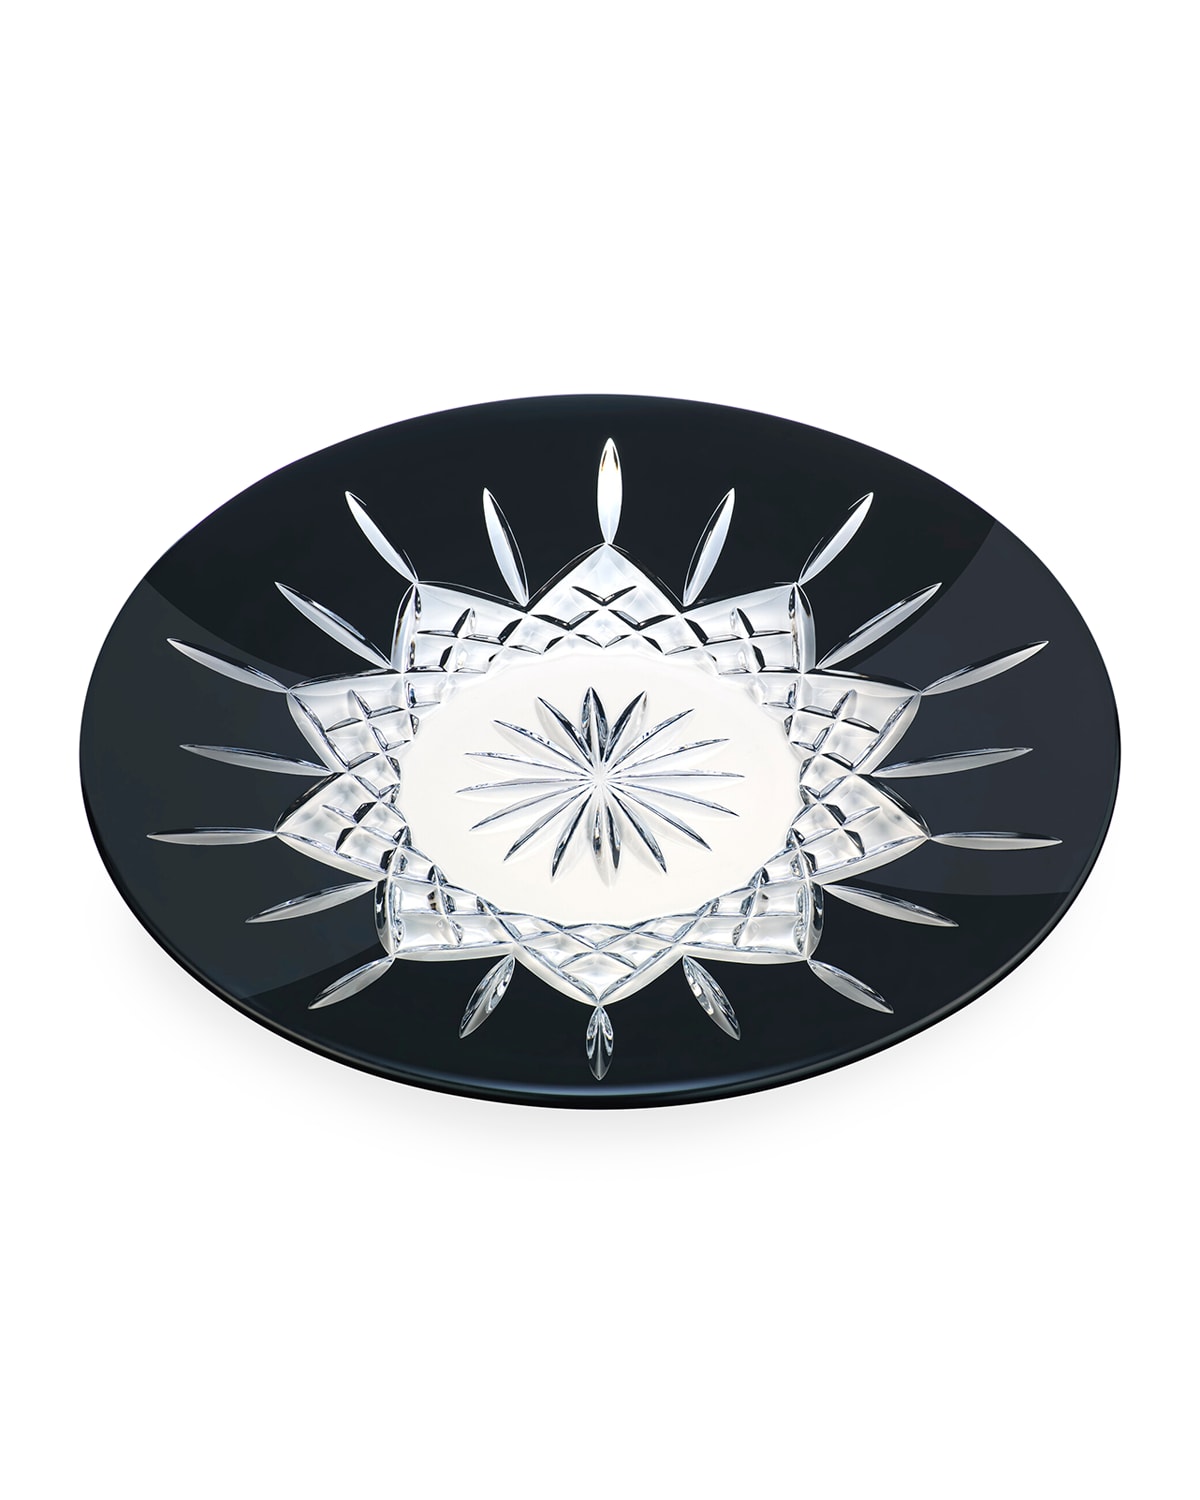 Shop Waterford Crystal Lismore Black Decorative Plate - 12"